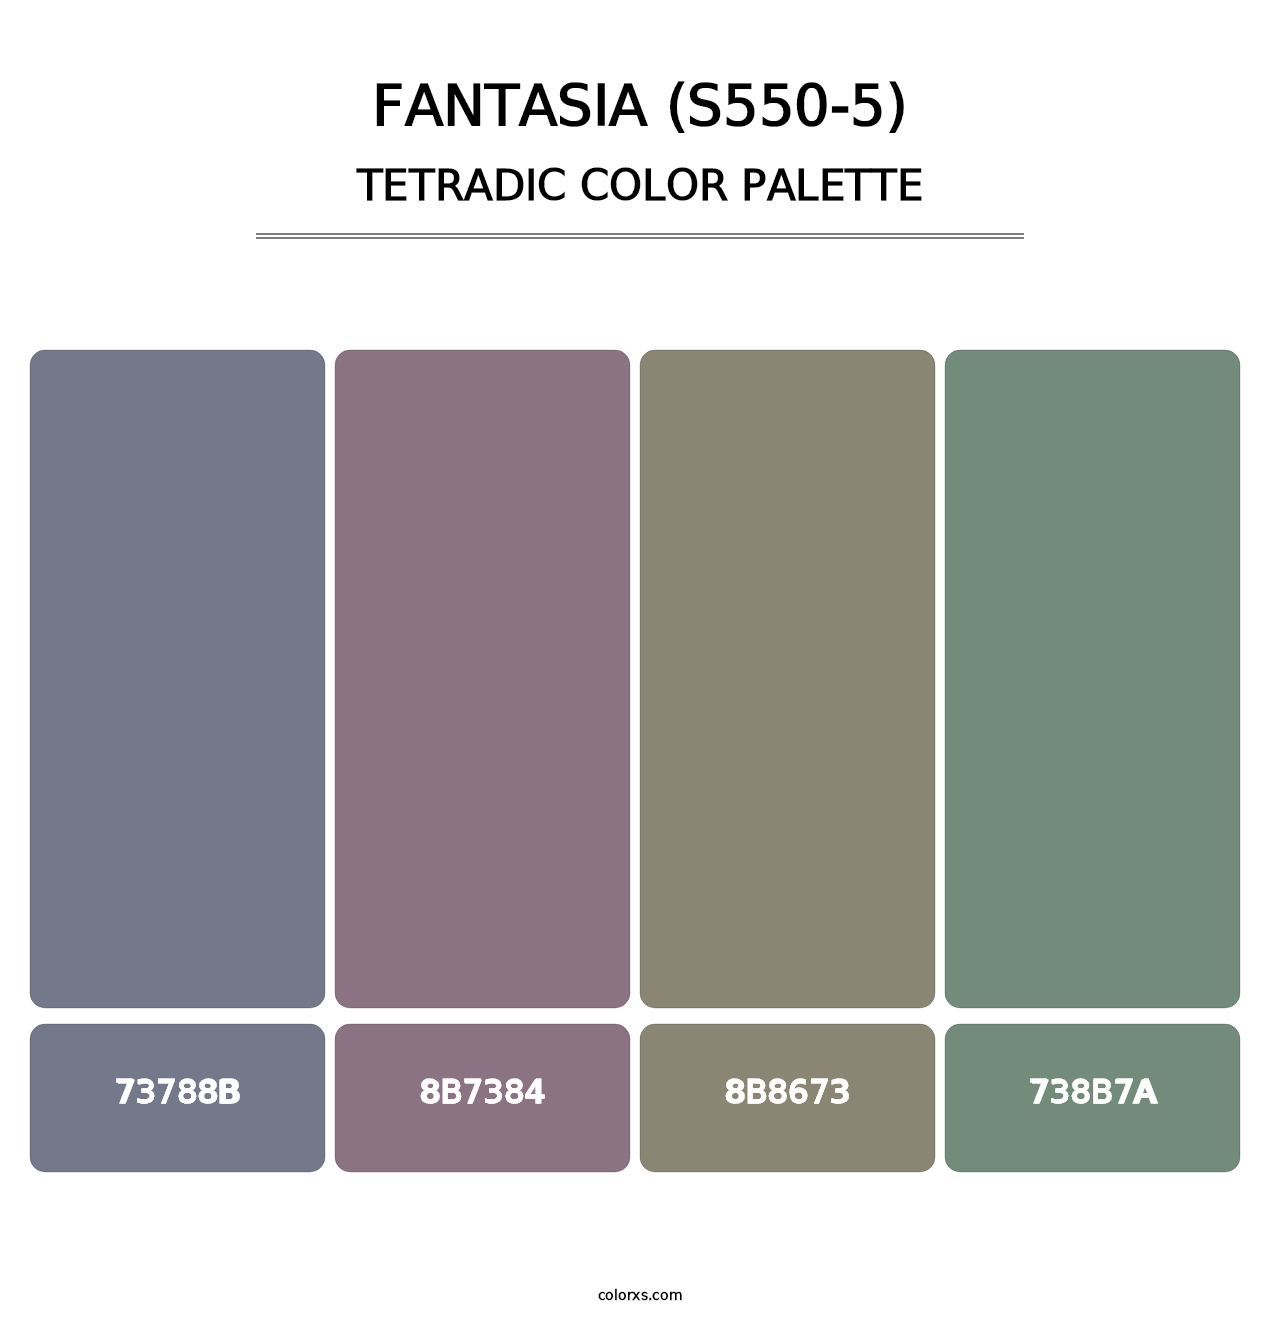 Fantasia (S550-5) - Tetradic Color Palette